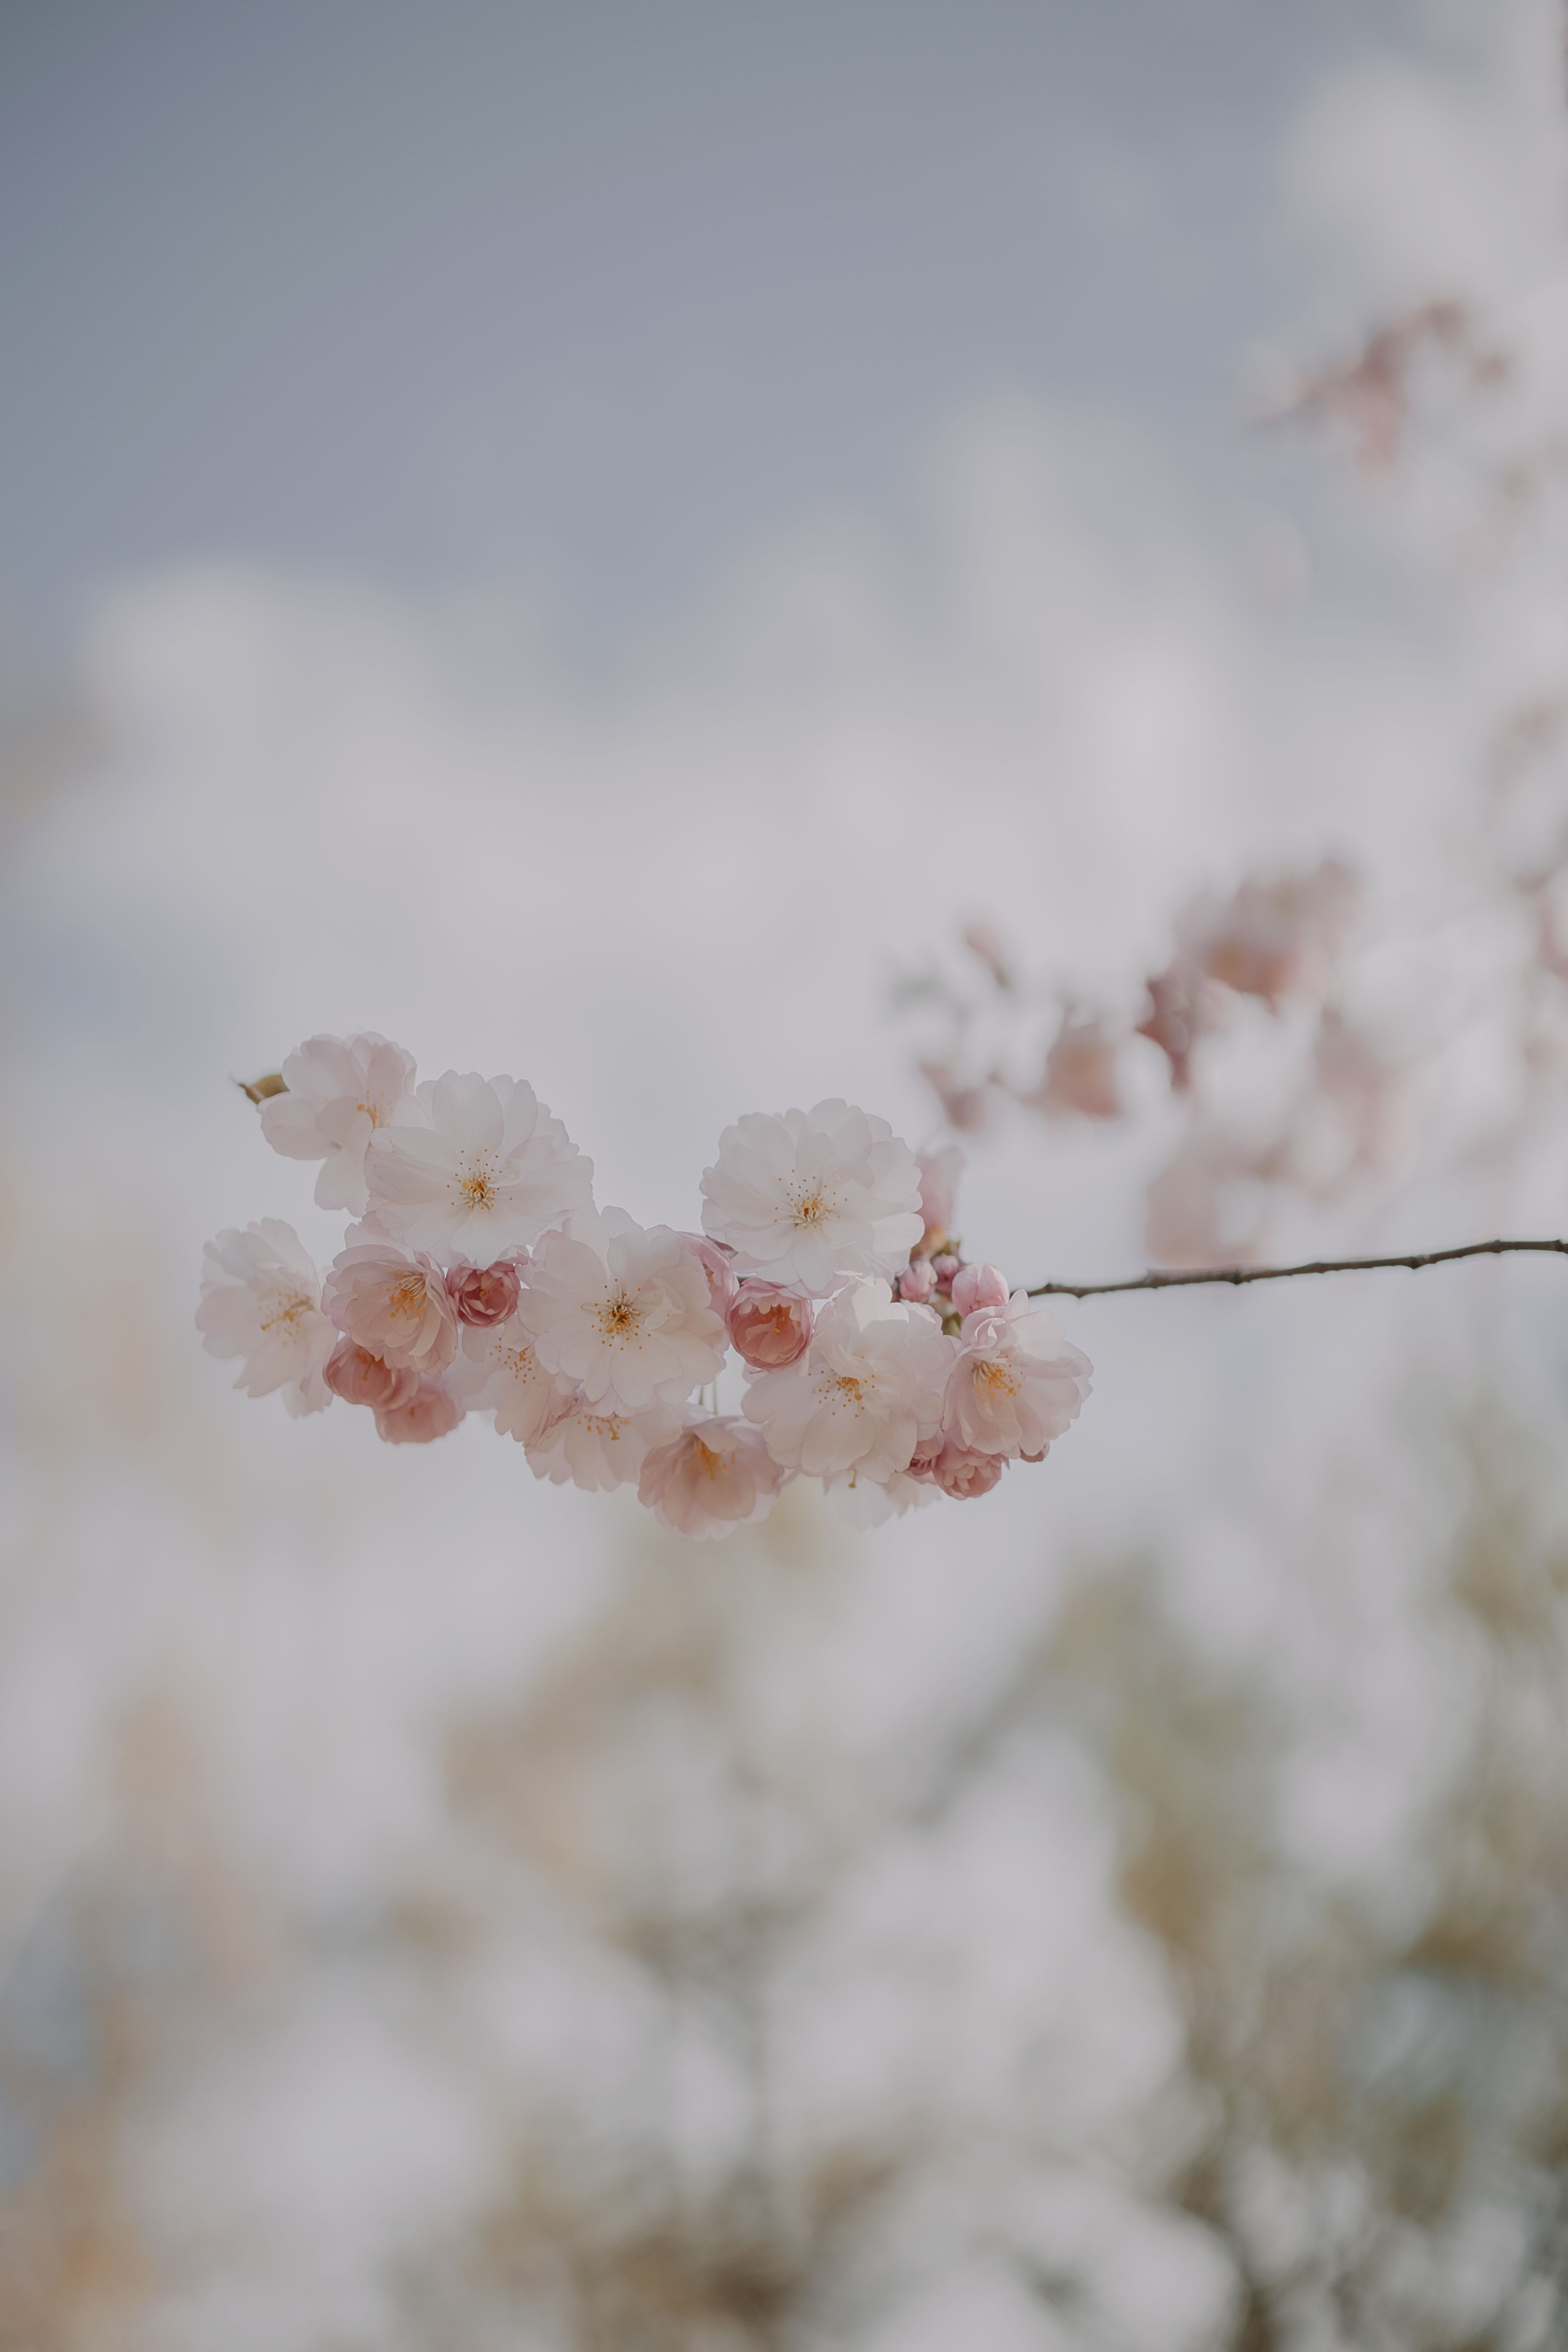 Share sakura tree aesthetic wallpaper